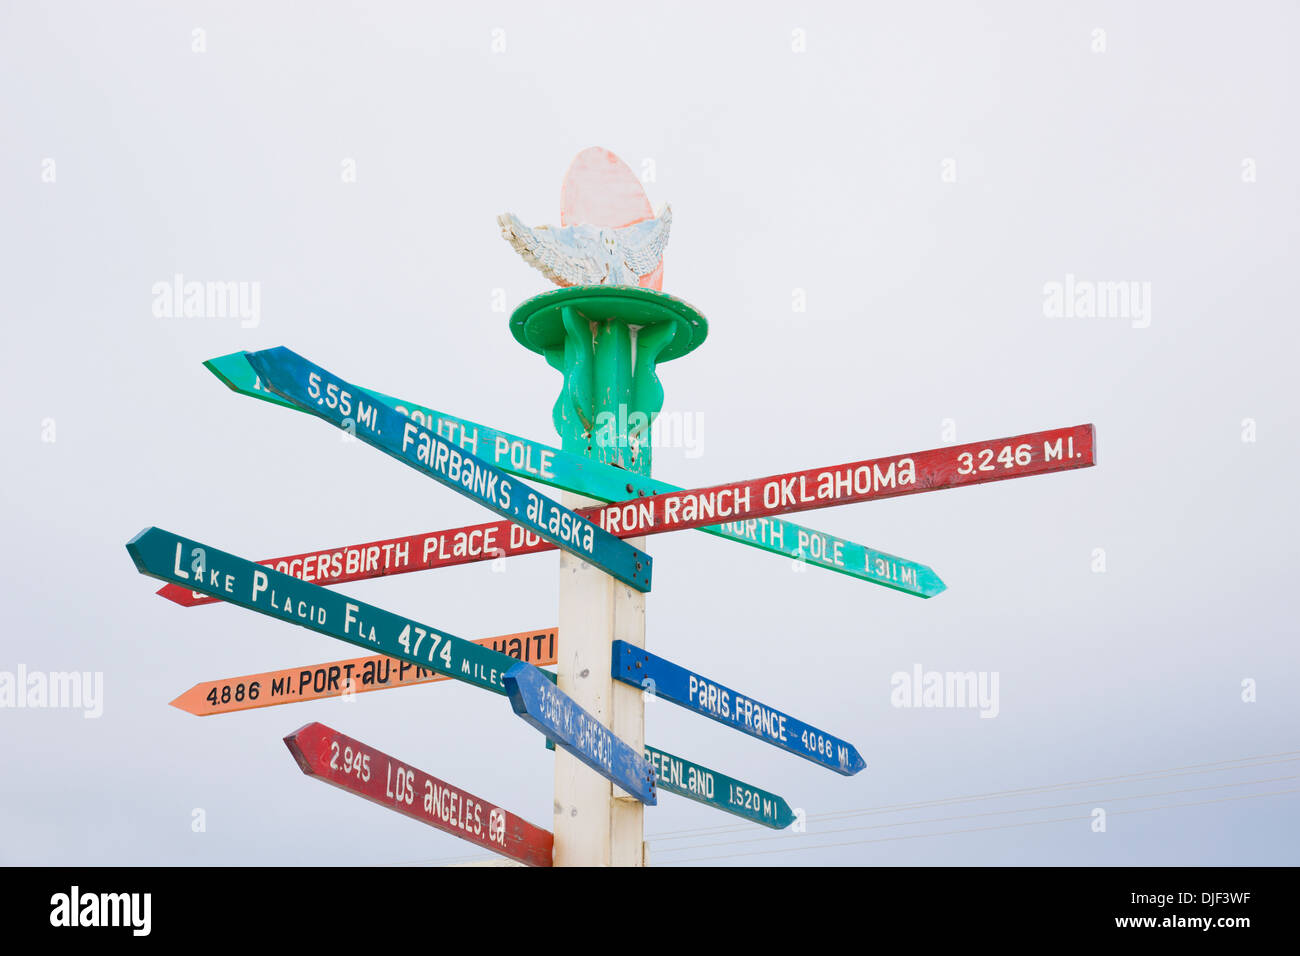 Mileage signpost;Barrow alaska united states of america Stock Photo